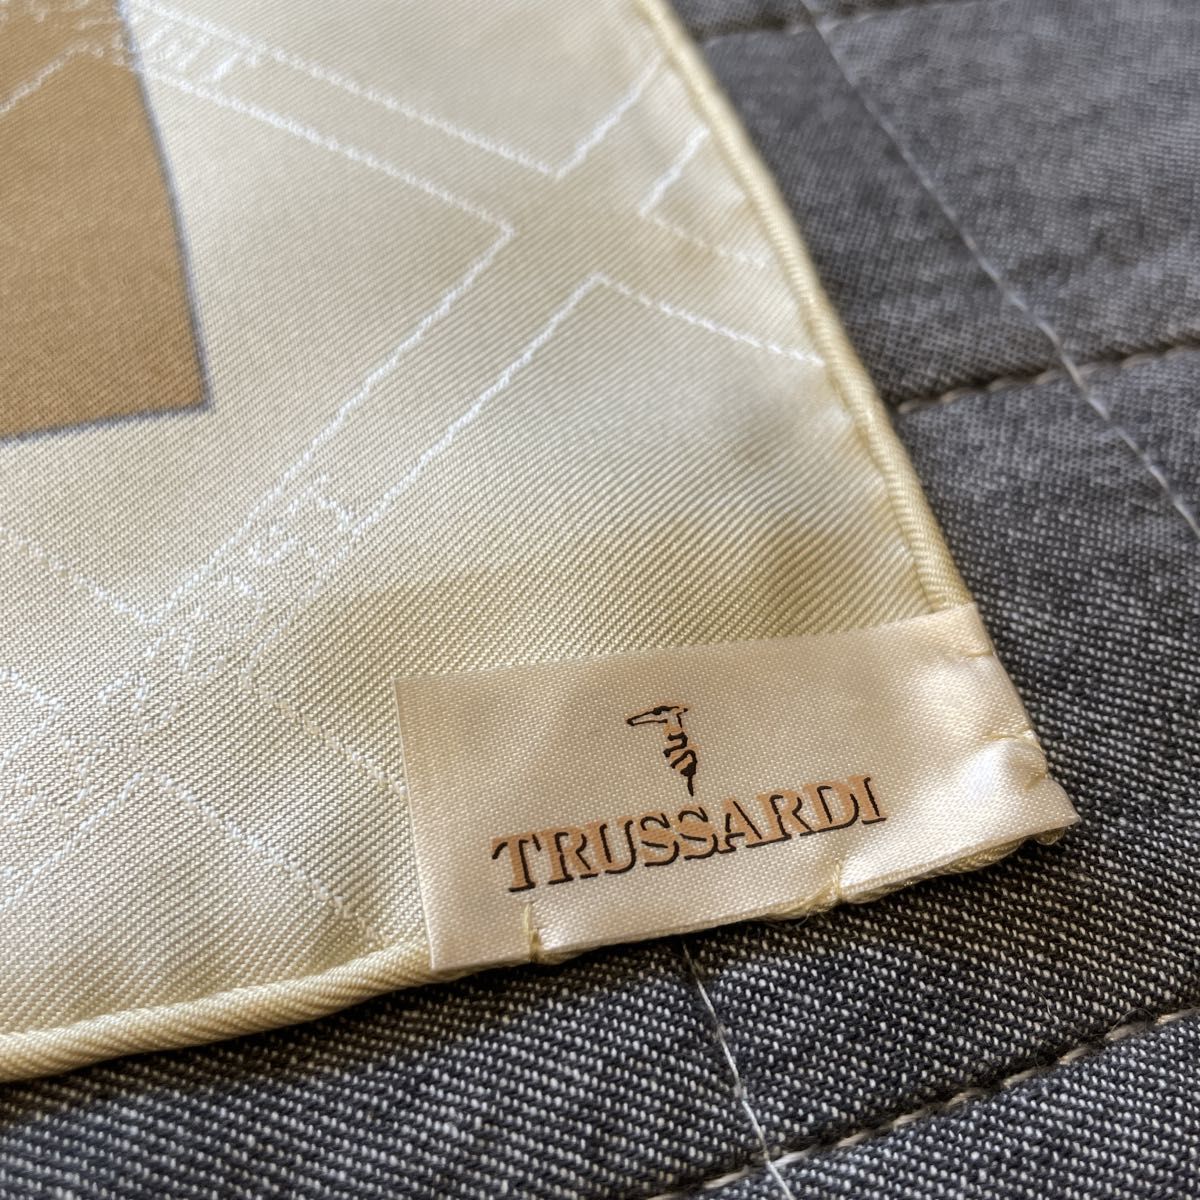 TRUSSARDI トラサルディ ヴィンテージ 大判 シルクスカーフ ベージュ系 ロゴ